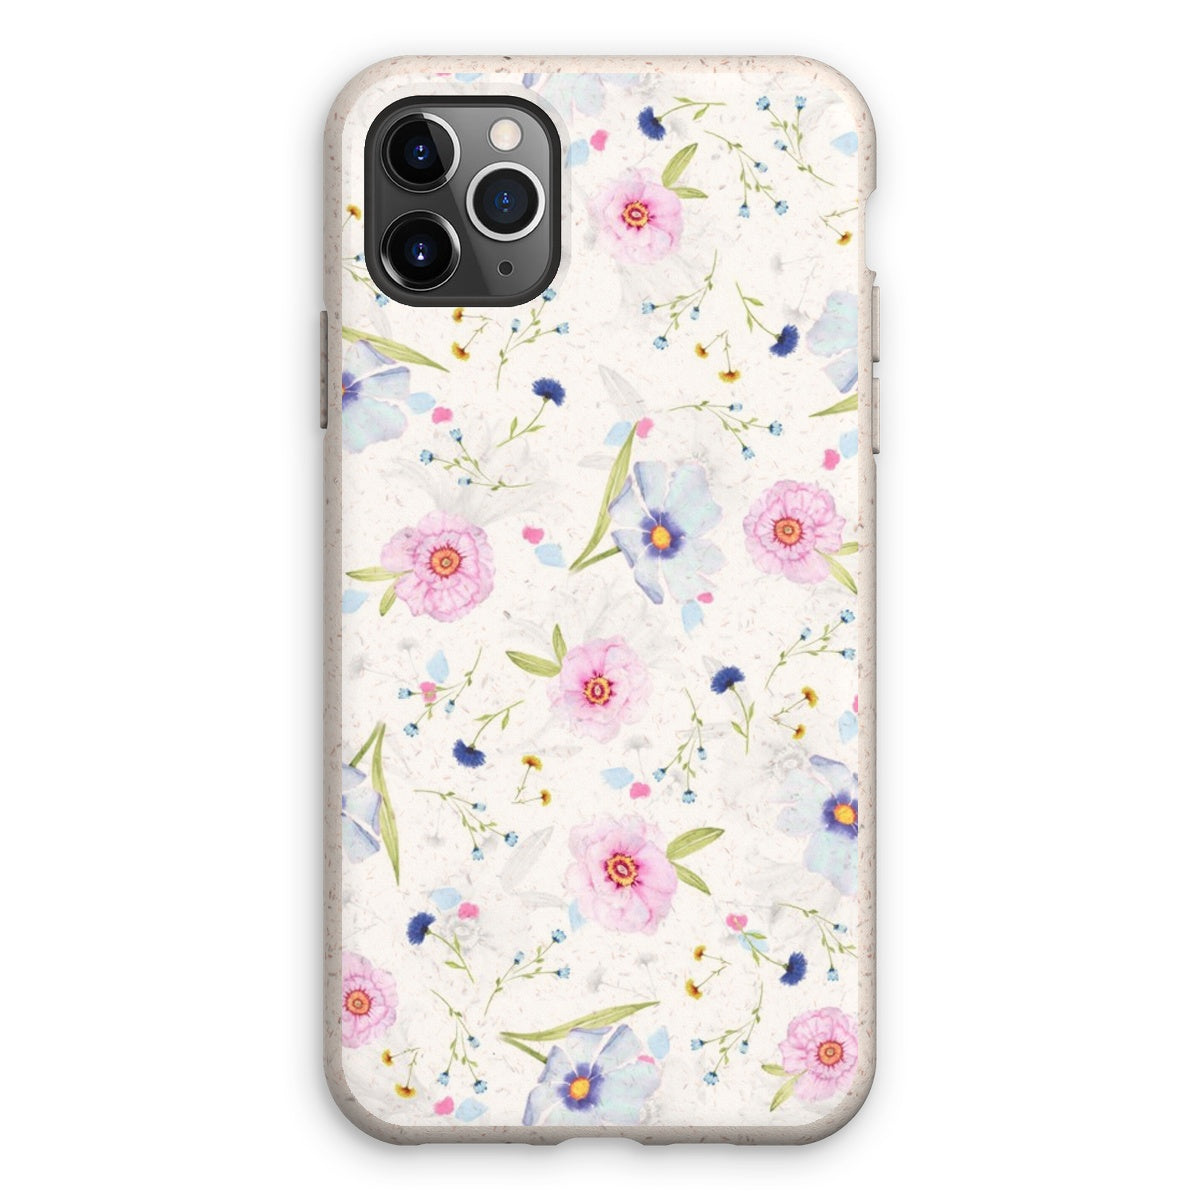 FlowerBG Eco Phone Case